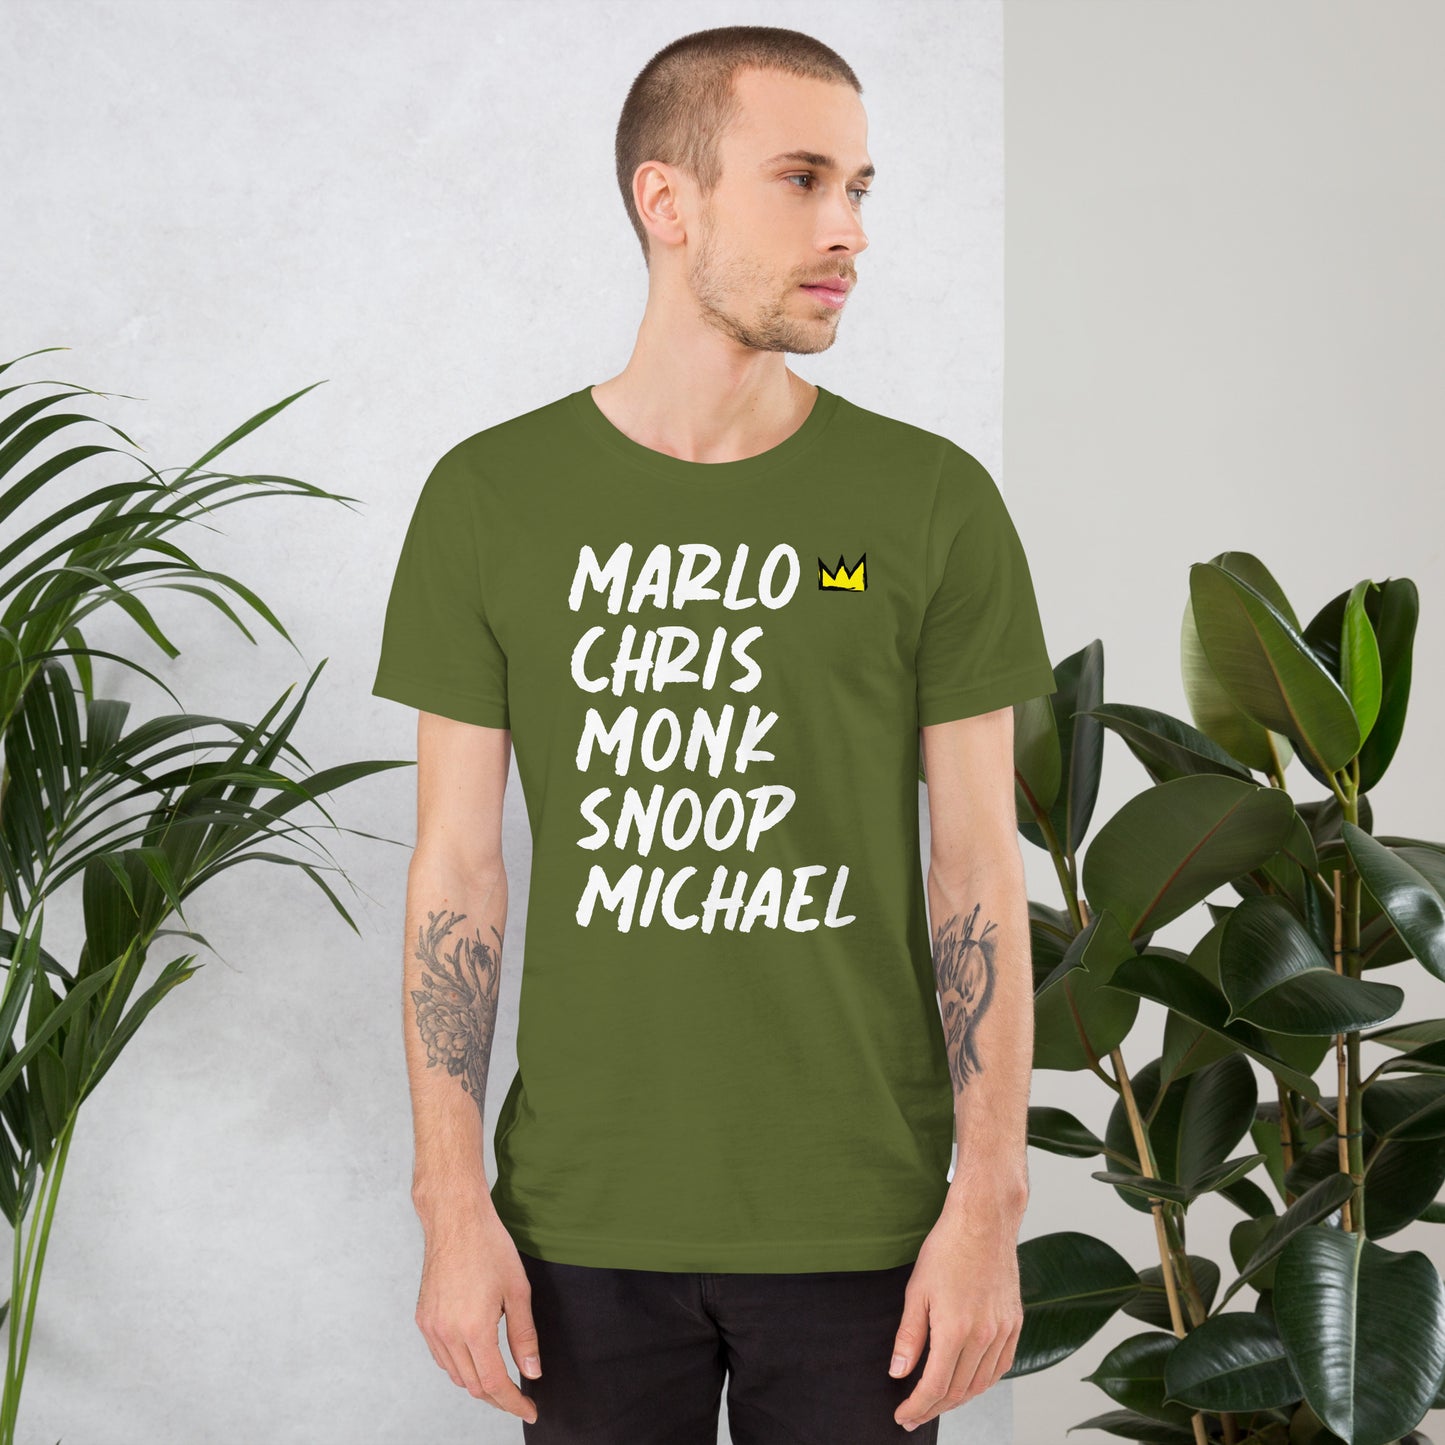 MARLO CHRIS MONK SNOOP MICHAEL - Unisex t-shirt